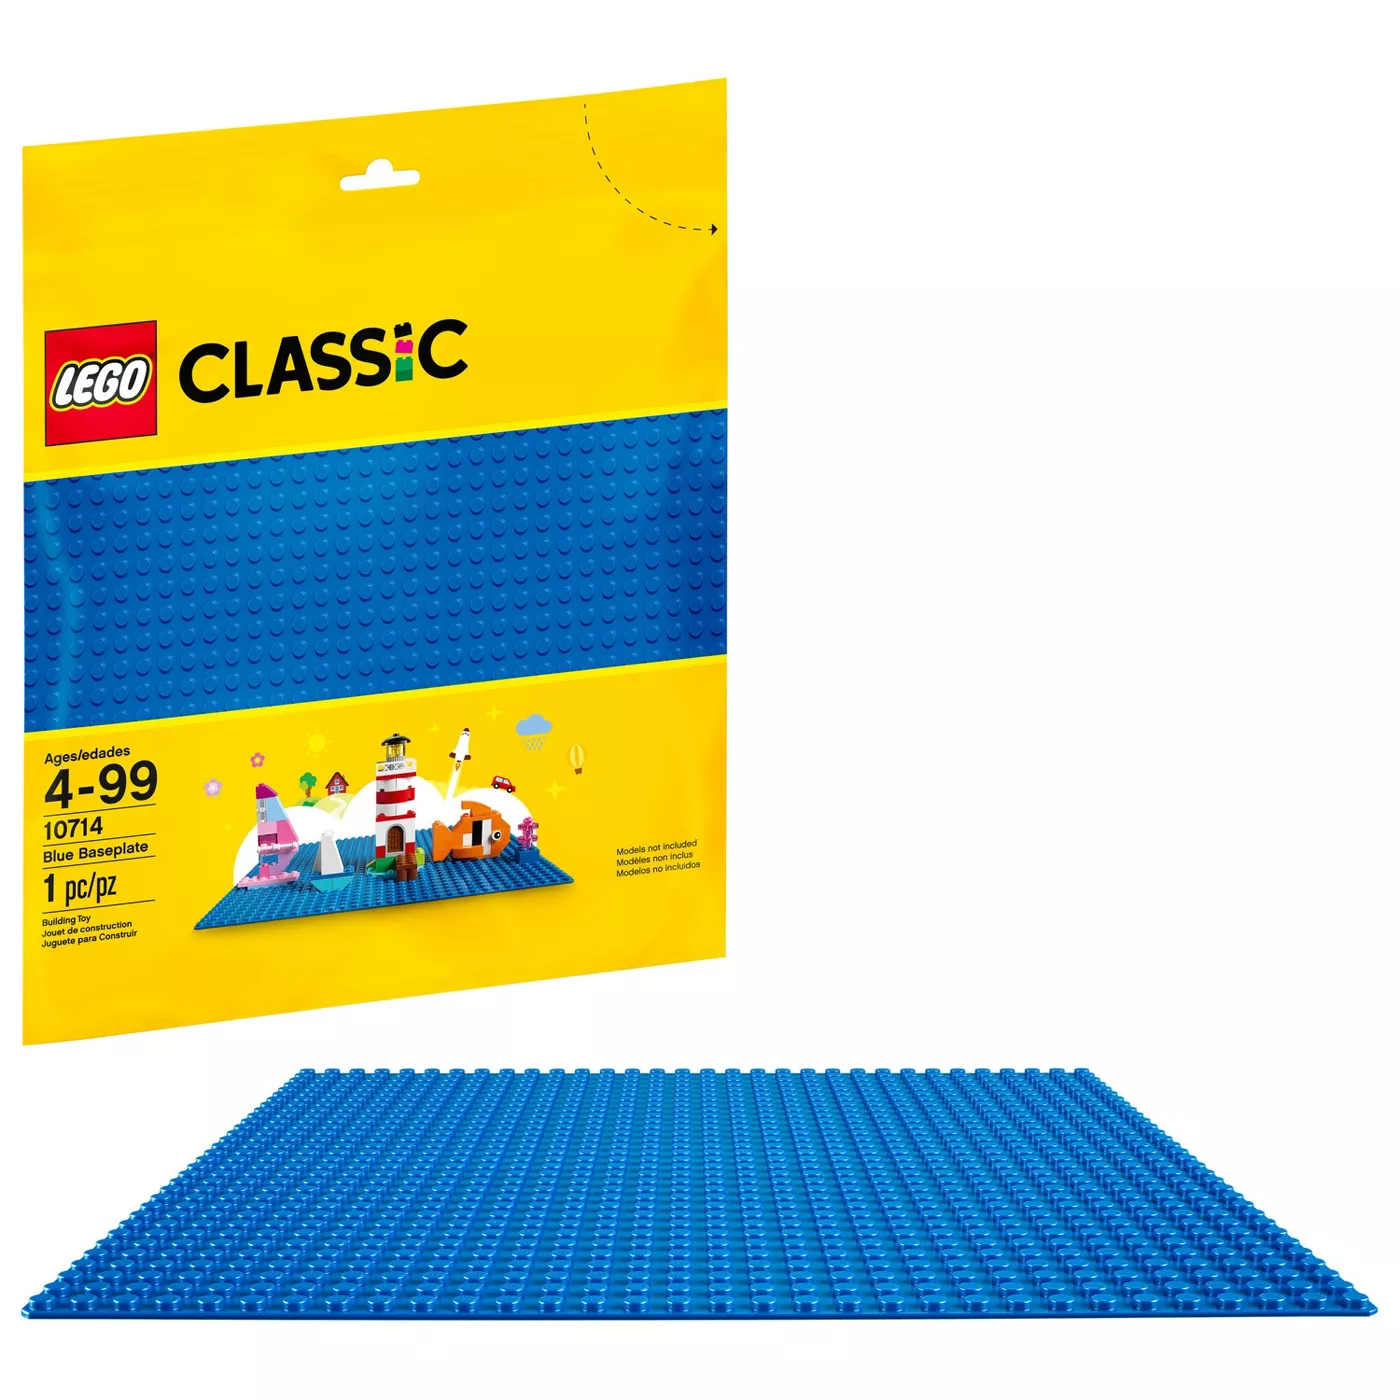 LEGO Classic Blue Baseplate 10714 - image 1 of 3